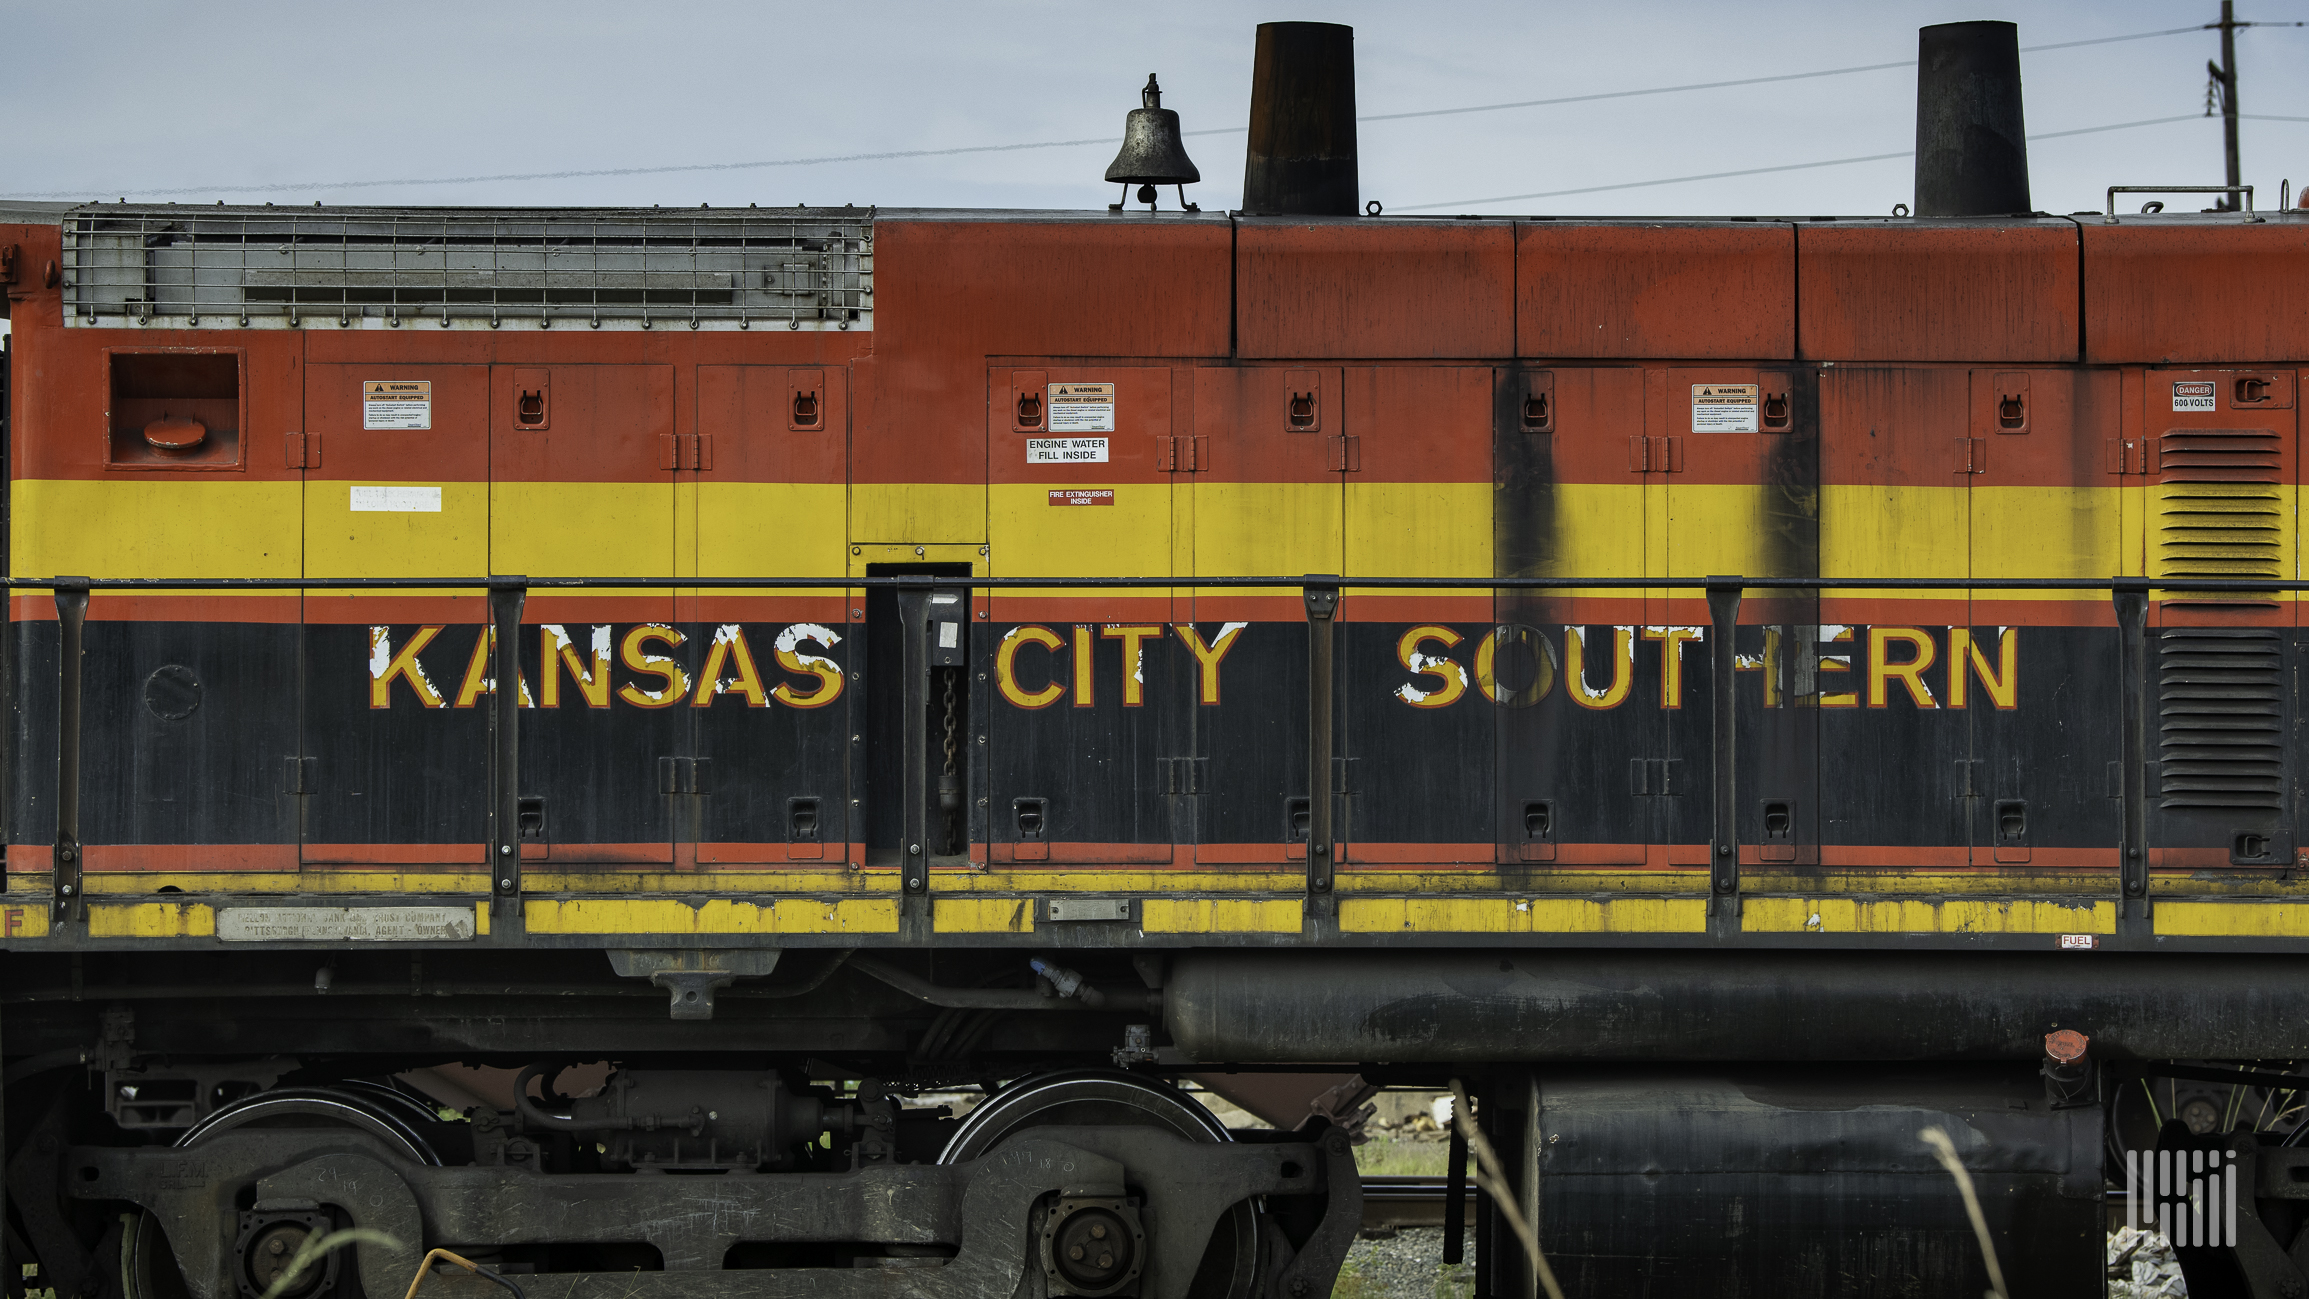 A photograph of a Kansas City Southern train.